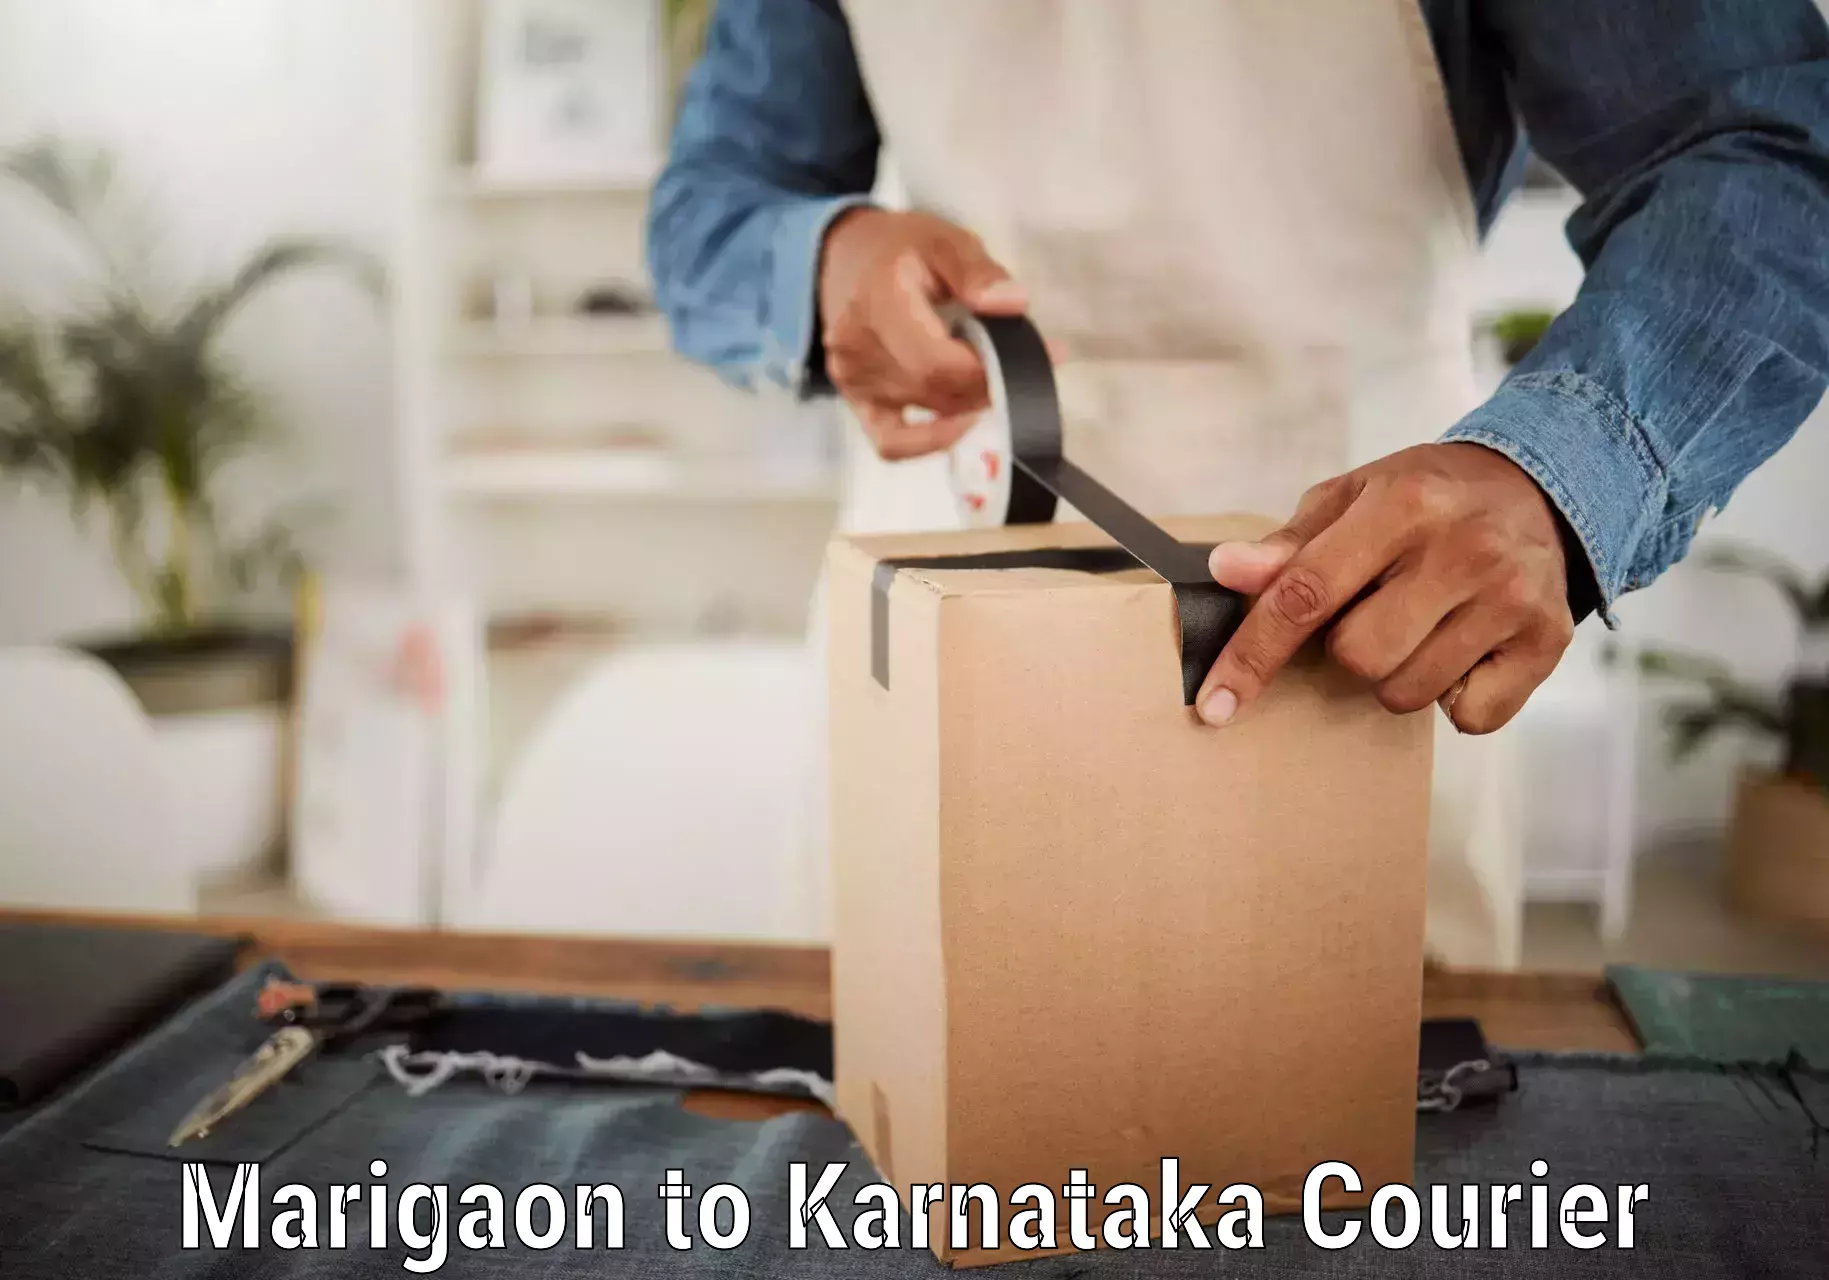 Urgent courier needs in Marigaon to Dakshina Kannada